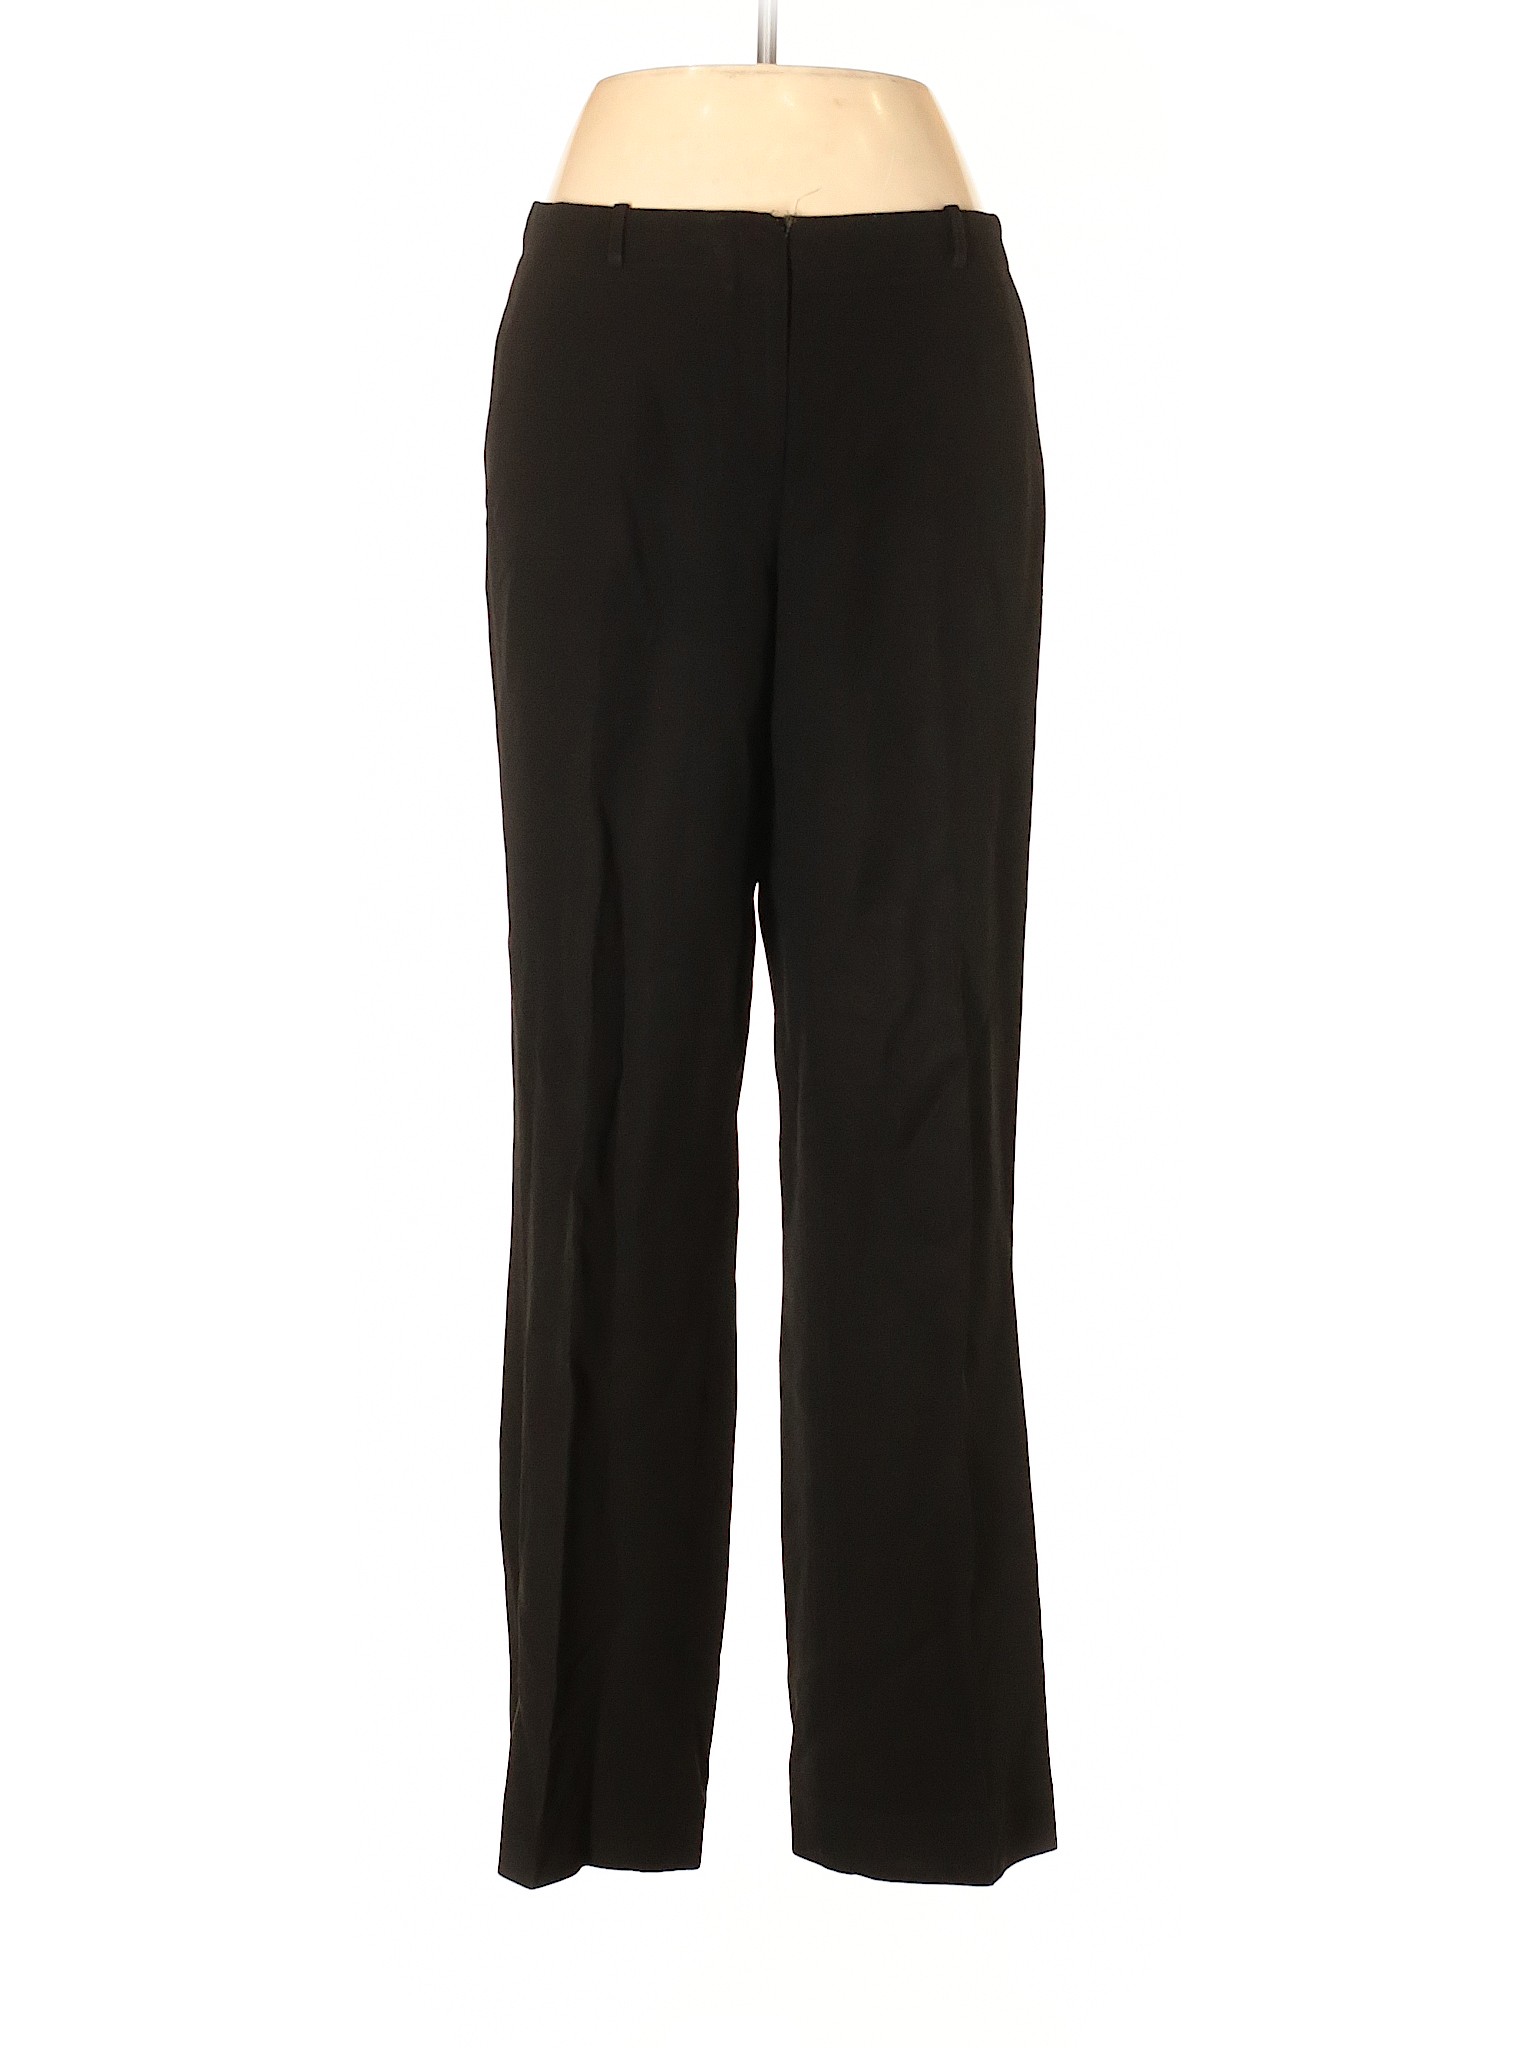 Lafayette 148 New York Women Black Dress Pants 8 | eBay